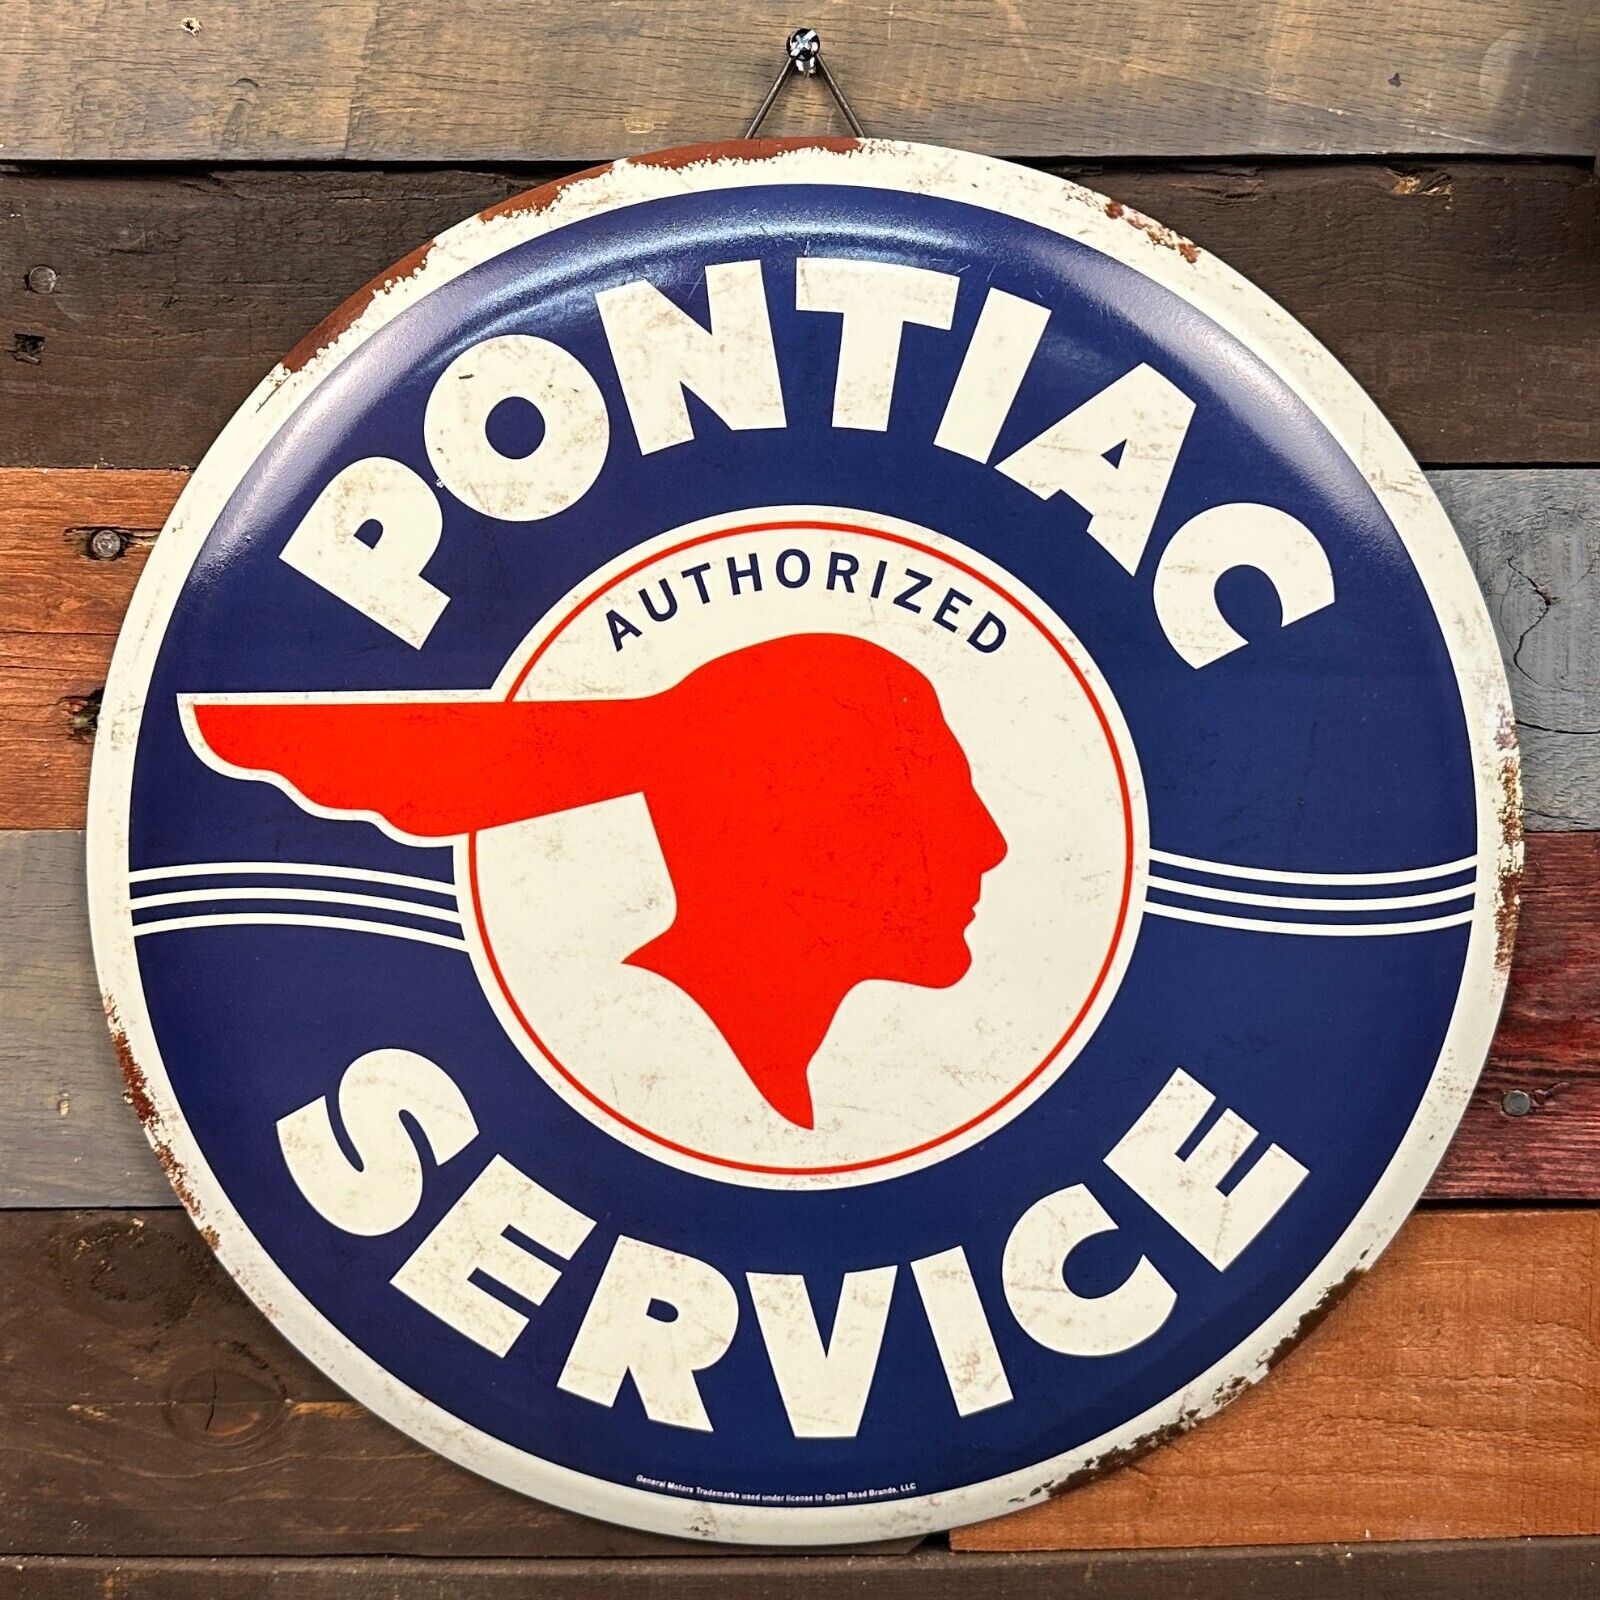 Pontiac Authorized Service Hanging Metal Sign With Vintage Design Man Cave Decor